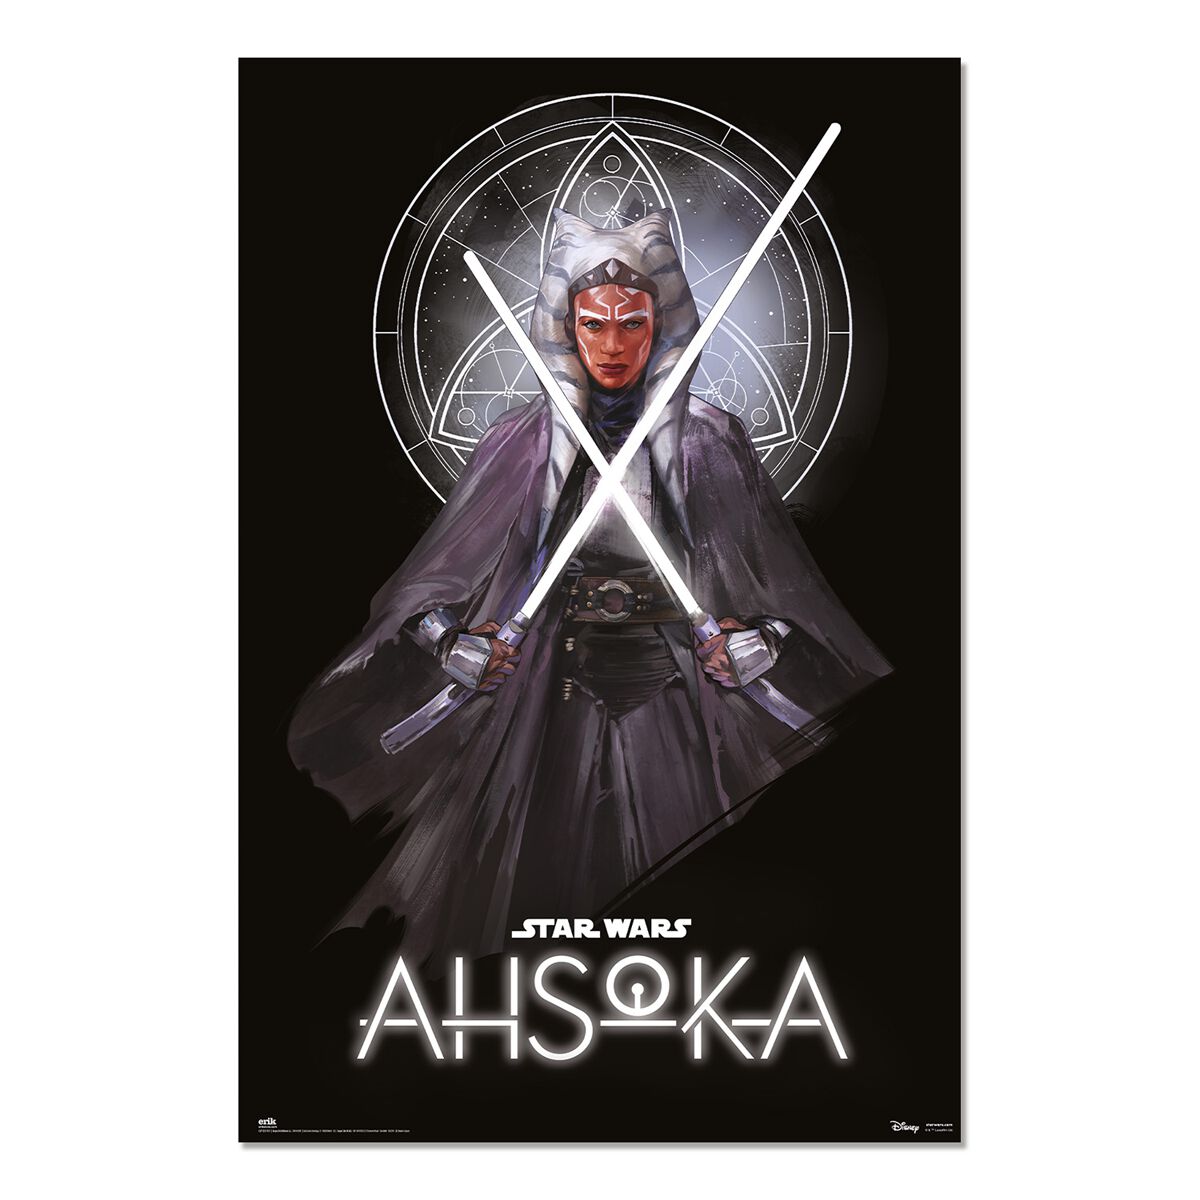 Star Wars Ahsoka - Ahsoka Tano Lightsabers Poster multicolor